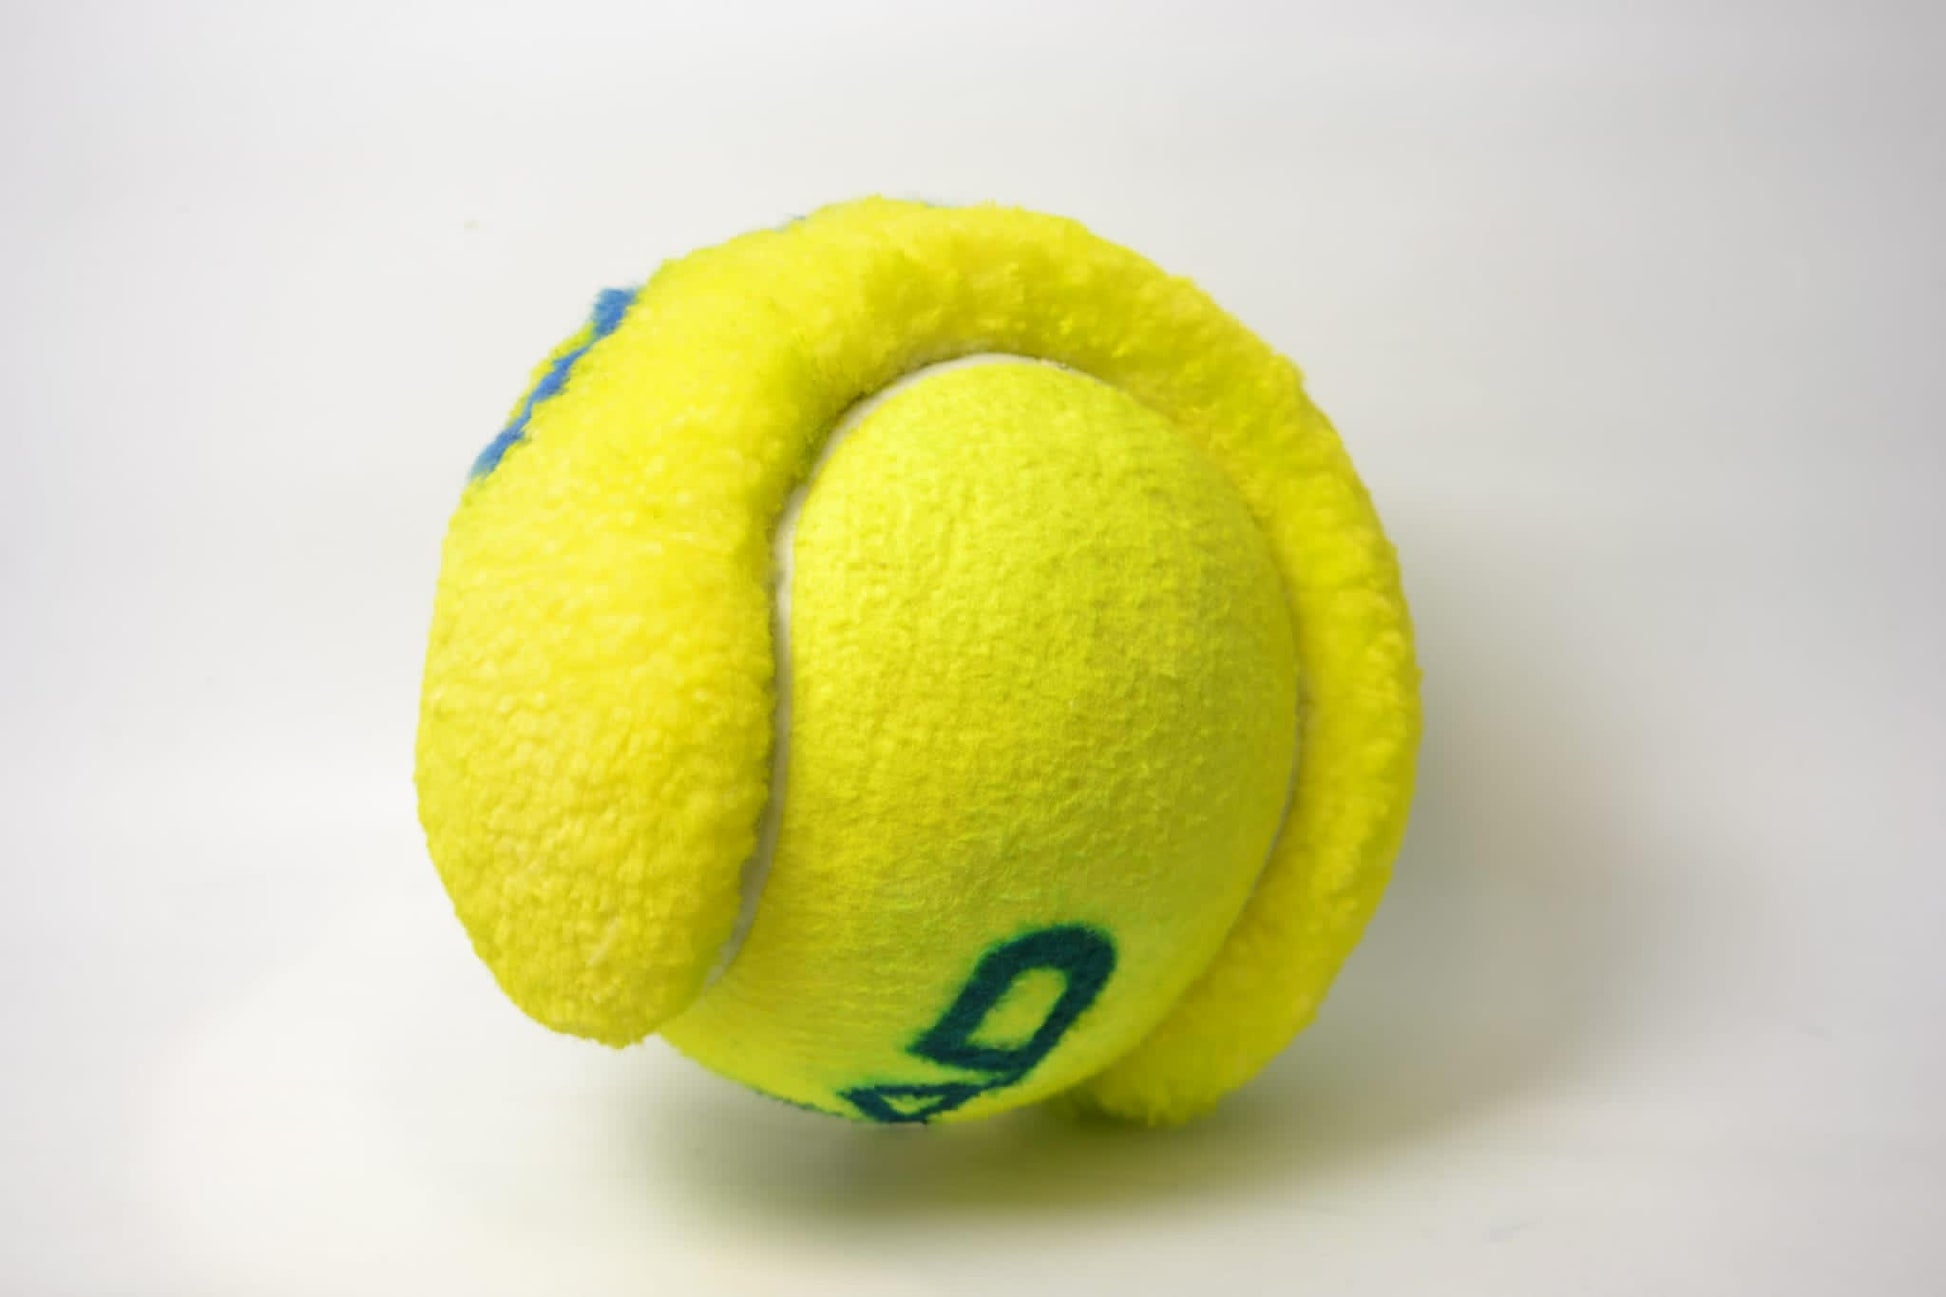 Simon Sheperd Art for sale 35 x35 cm tennis ball with an afro 